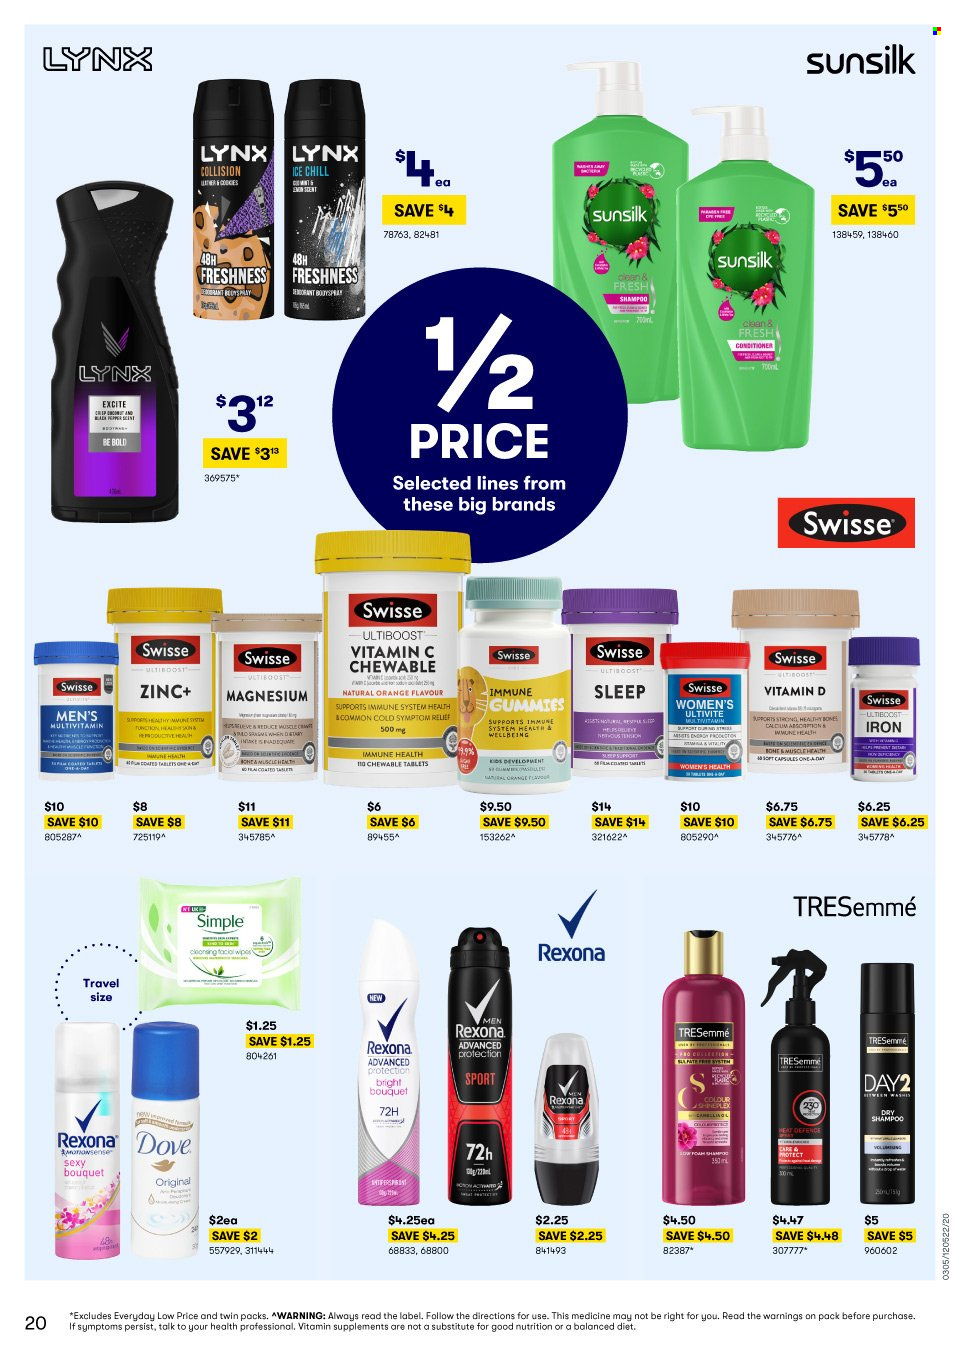 thumbnail - BIG W Catalogue - Sales products - wipes, Dove, shampoo, Sunsilk, Swisse, conditioner, TRESemmé, Rexona, iron, bouquet. Page 20.